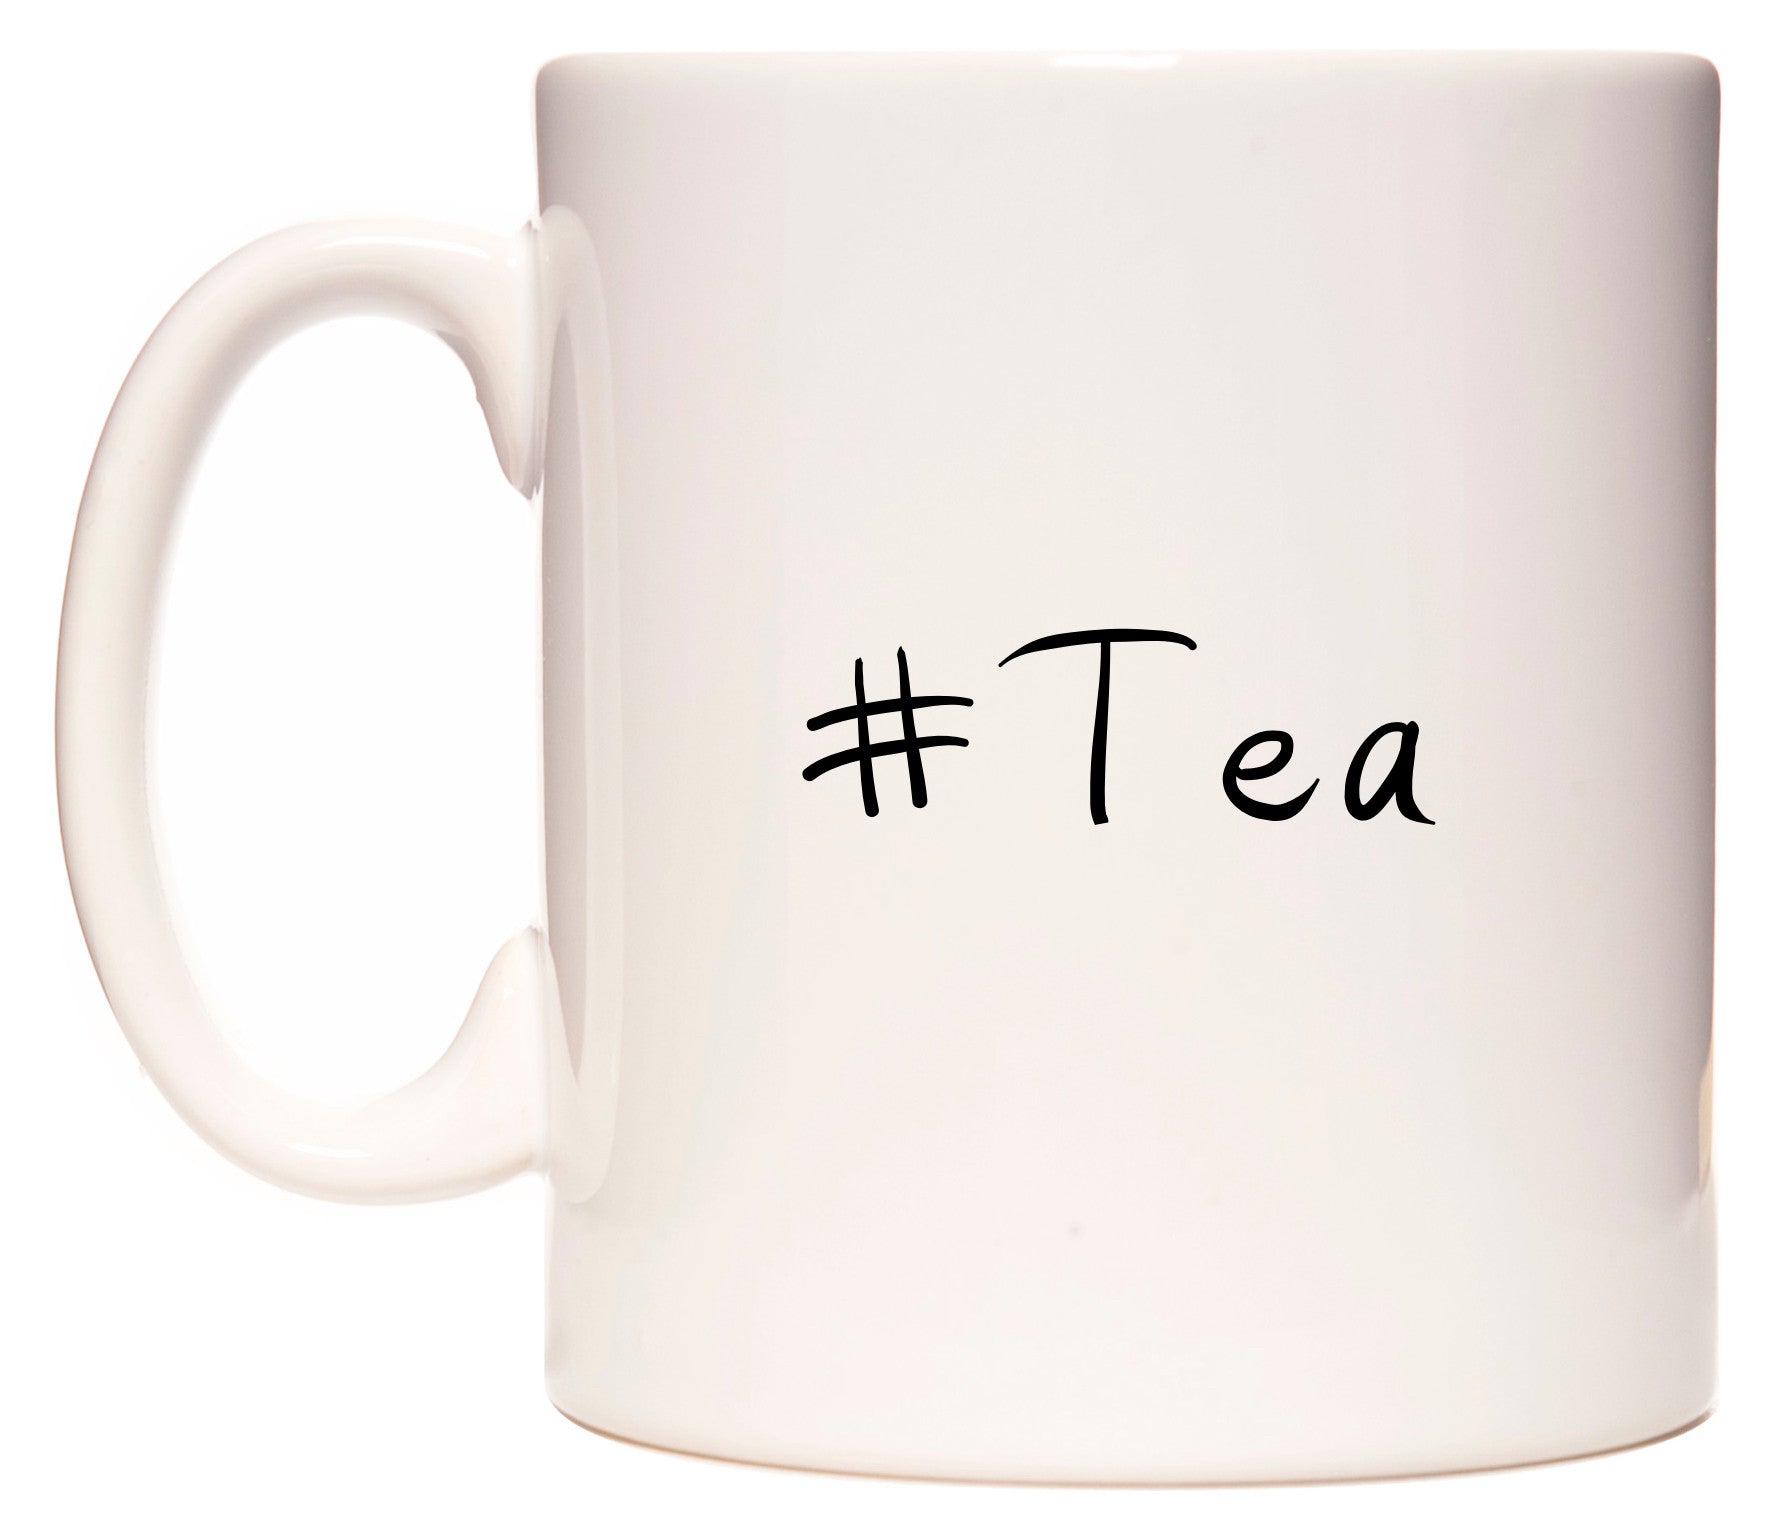 This mug features #Tea